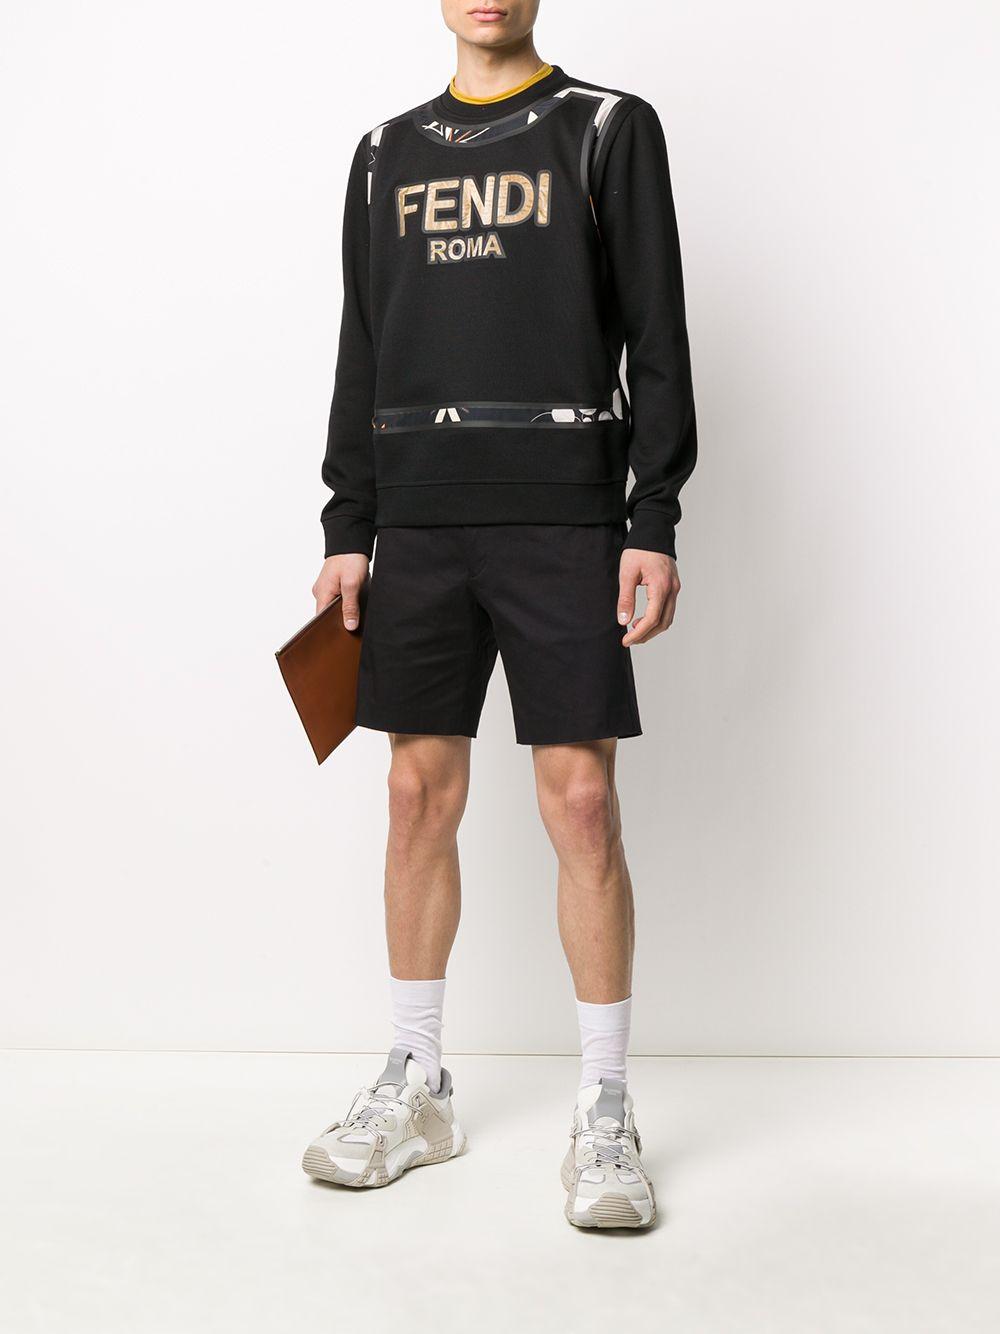 Fendi Synthetic Logo Print Sweatshirt in Black for Men - Lyst